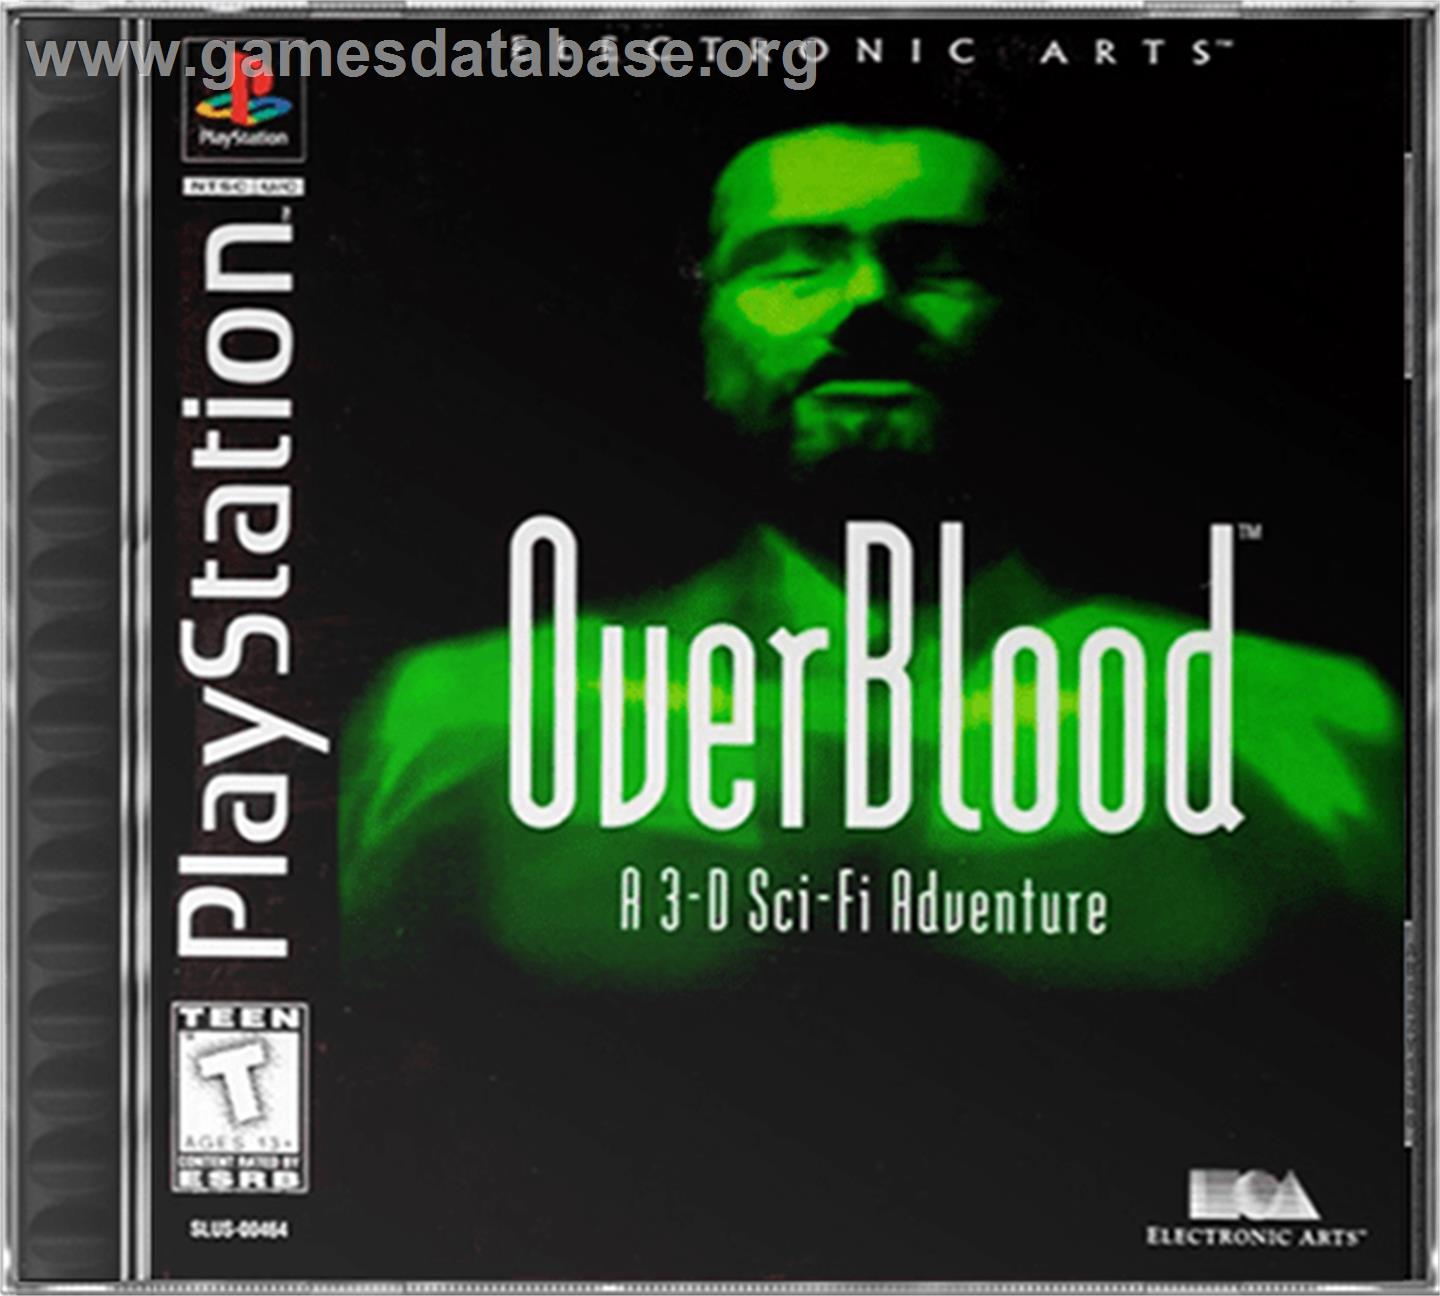 OverBlood - Sony Playstation - Artwork - Box